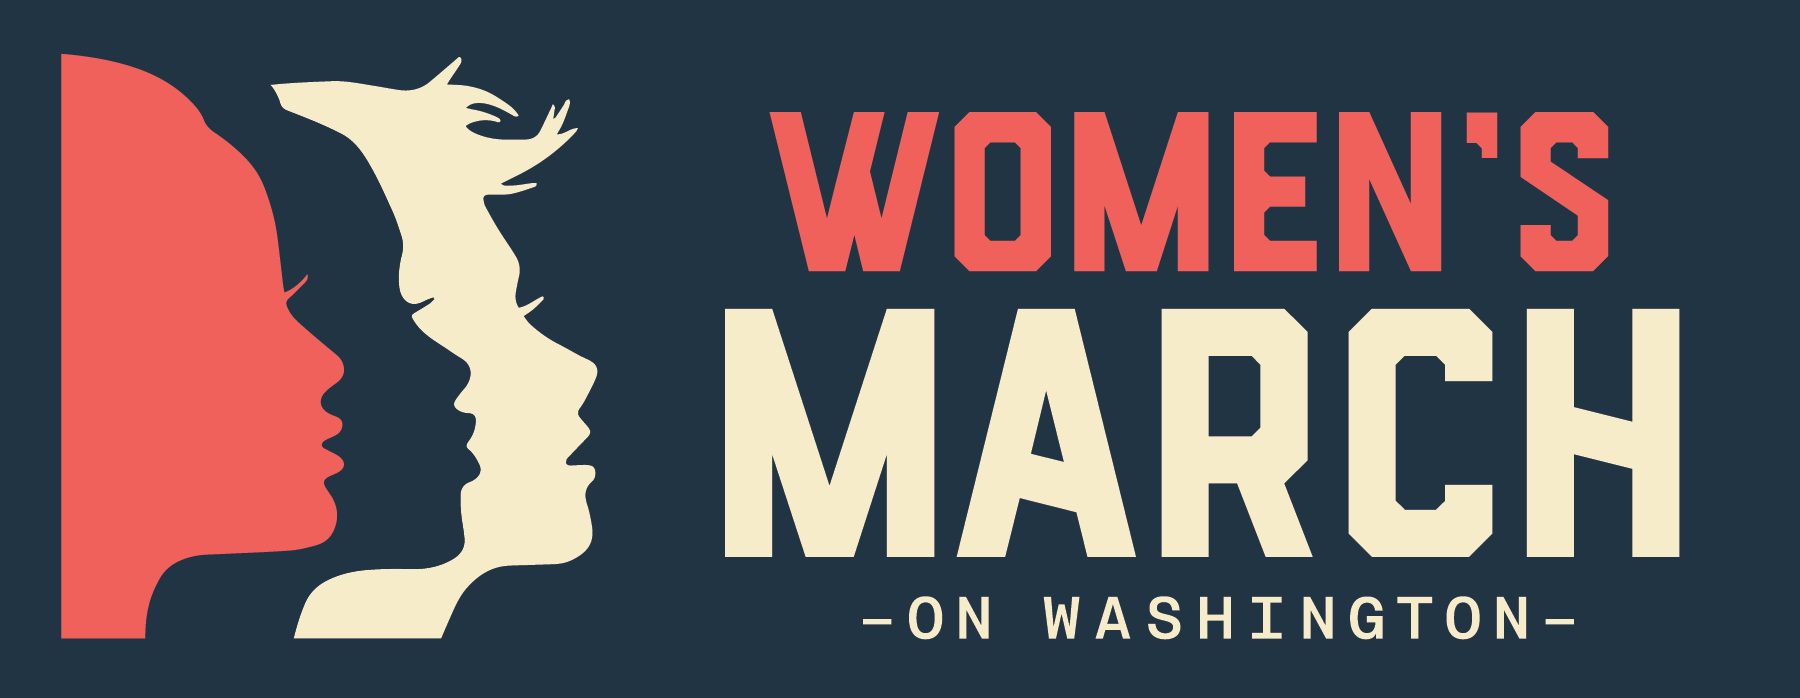 LGBTQ, Women's March on Washington, Inauguration 2017, Anti Trump, Washington DC March, KOLUMN Magazine, KOLUMN